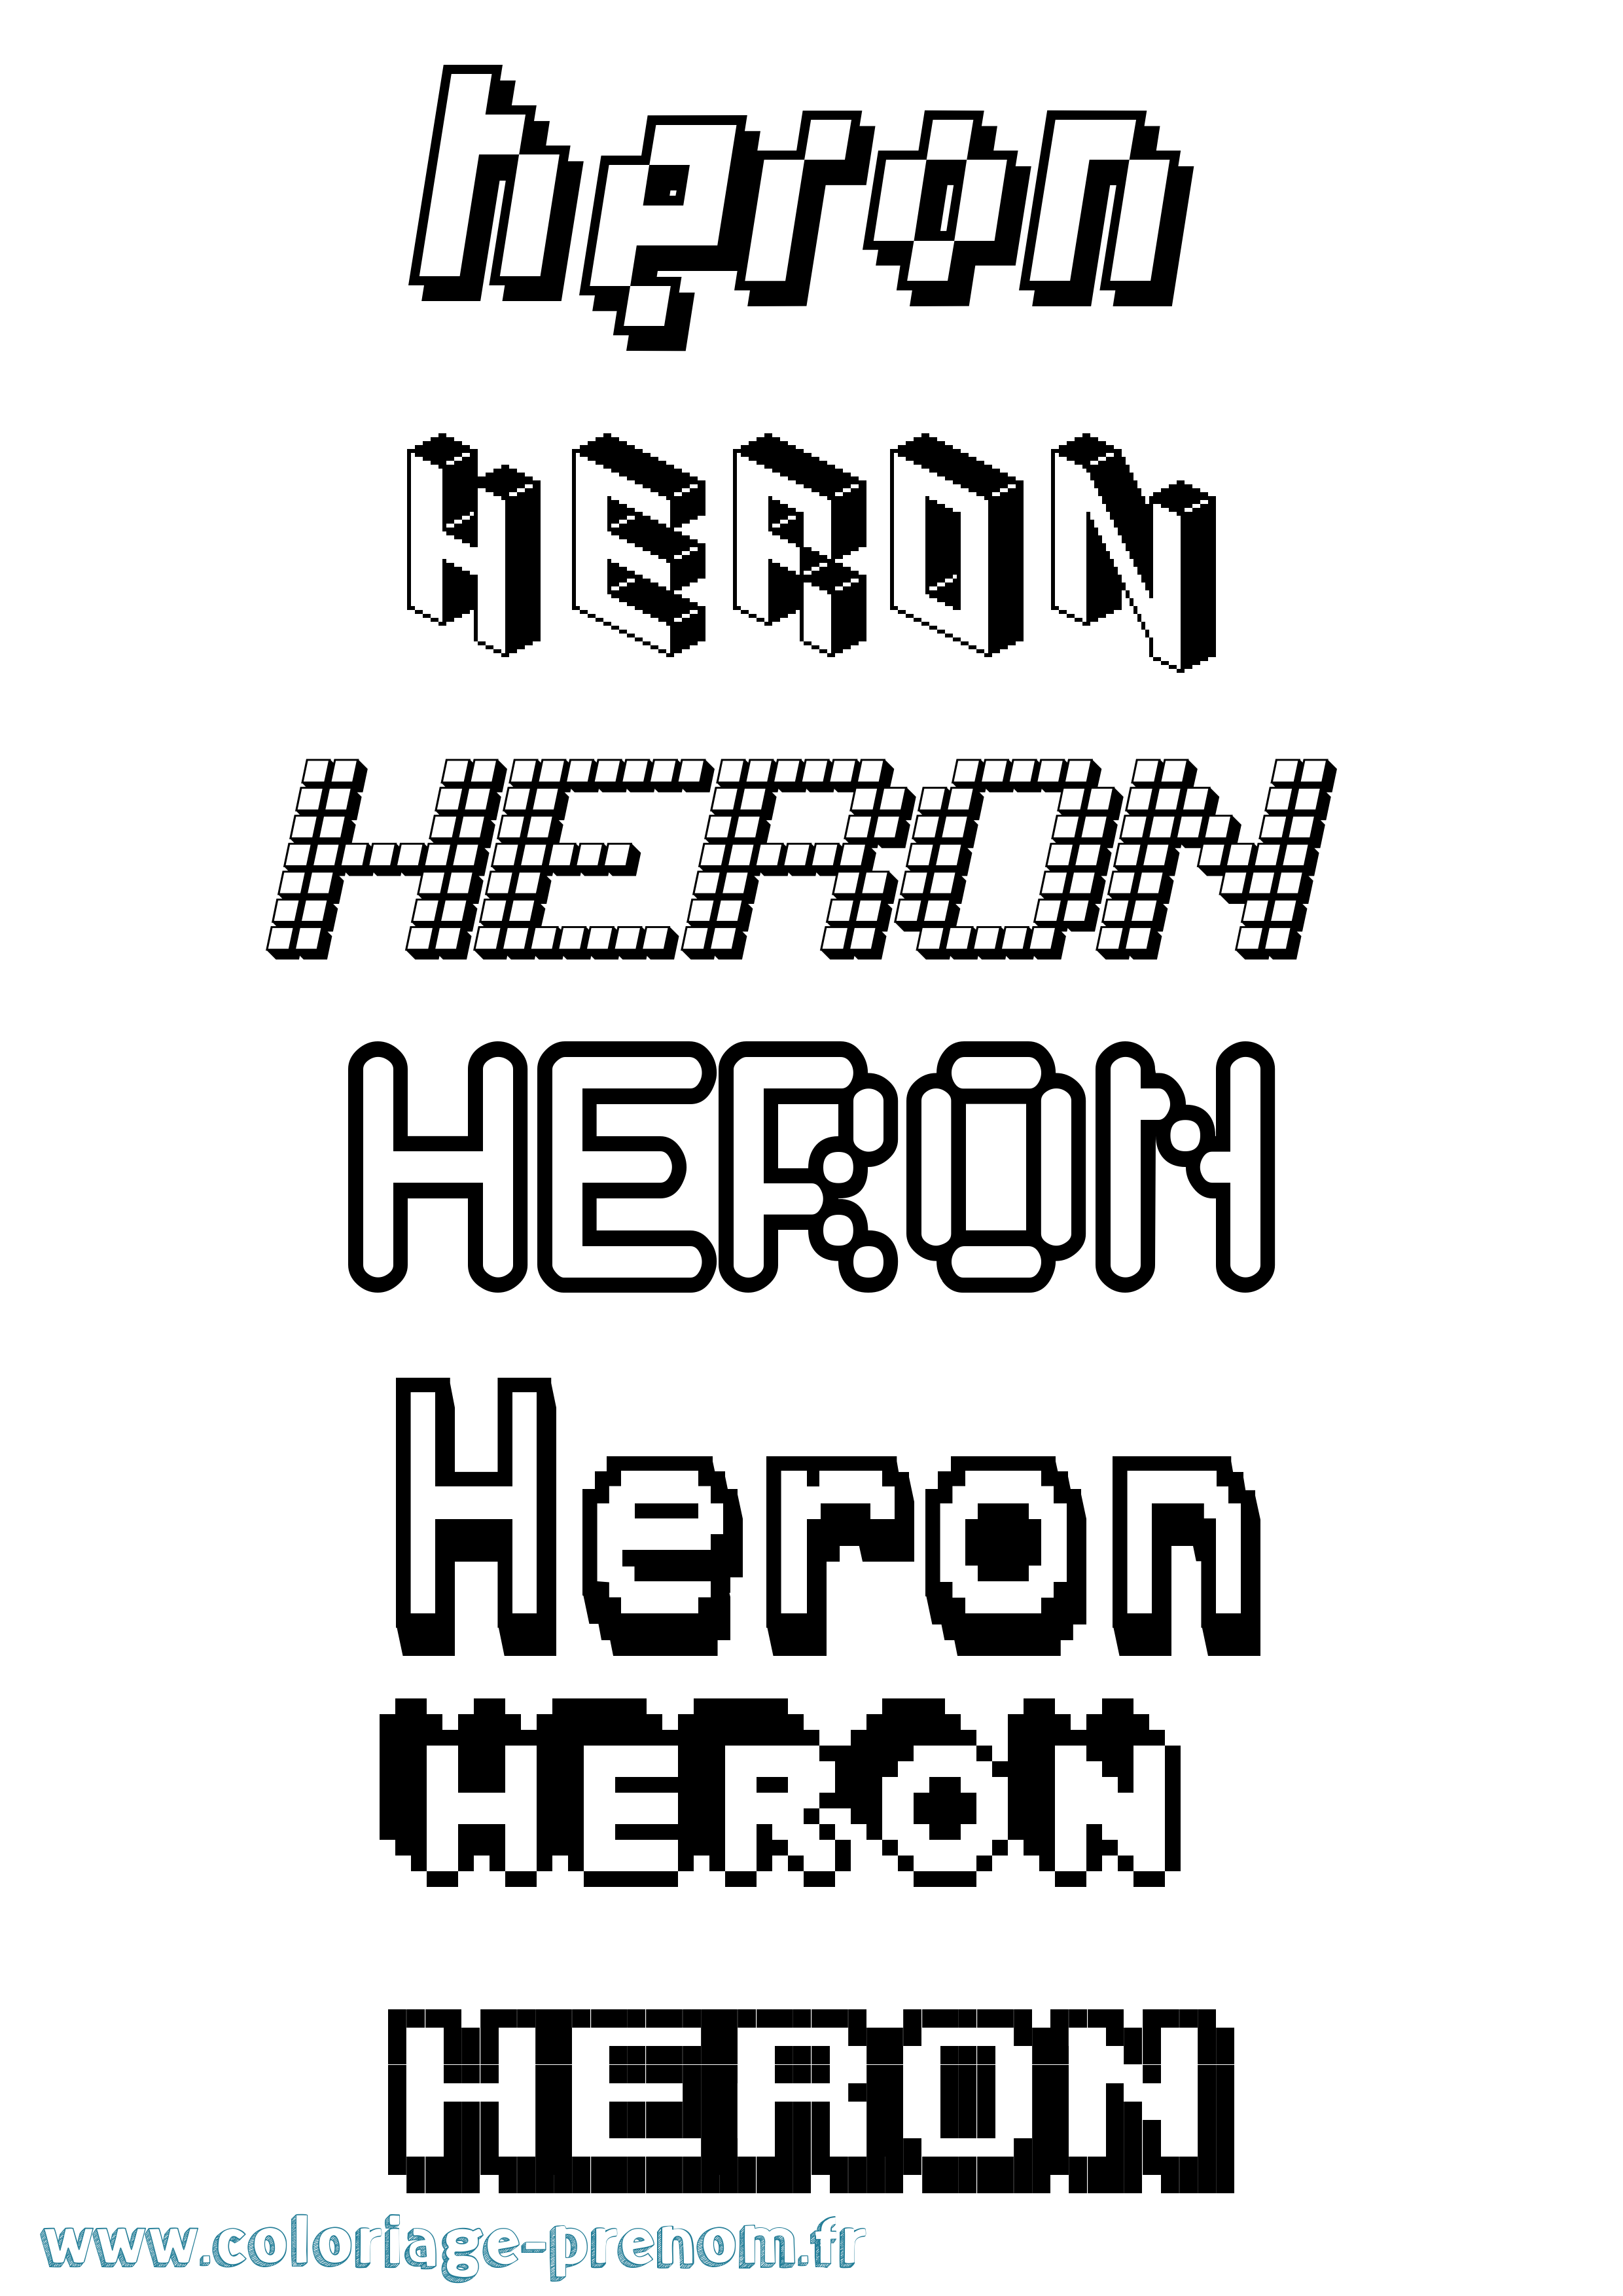 Coloriage prénom Heron Pixel